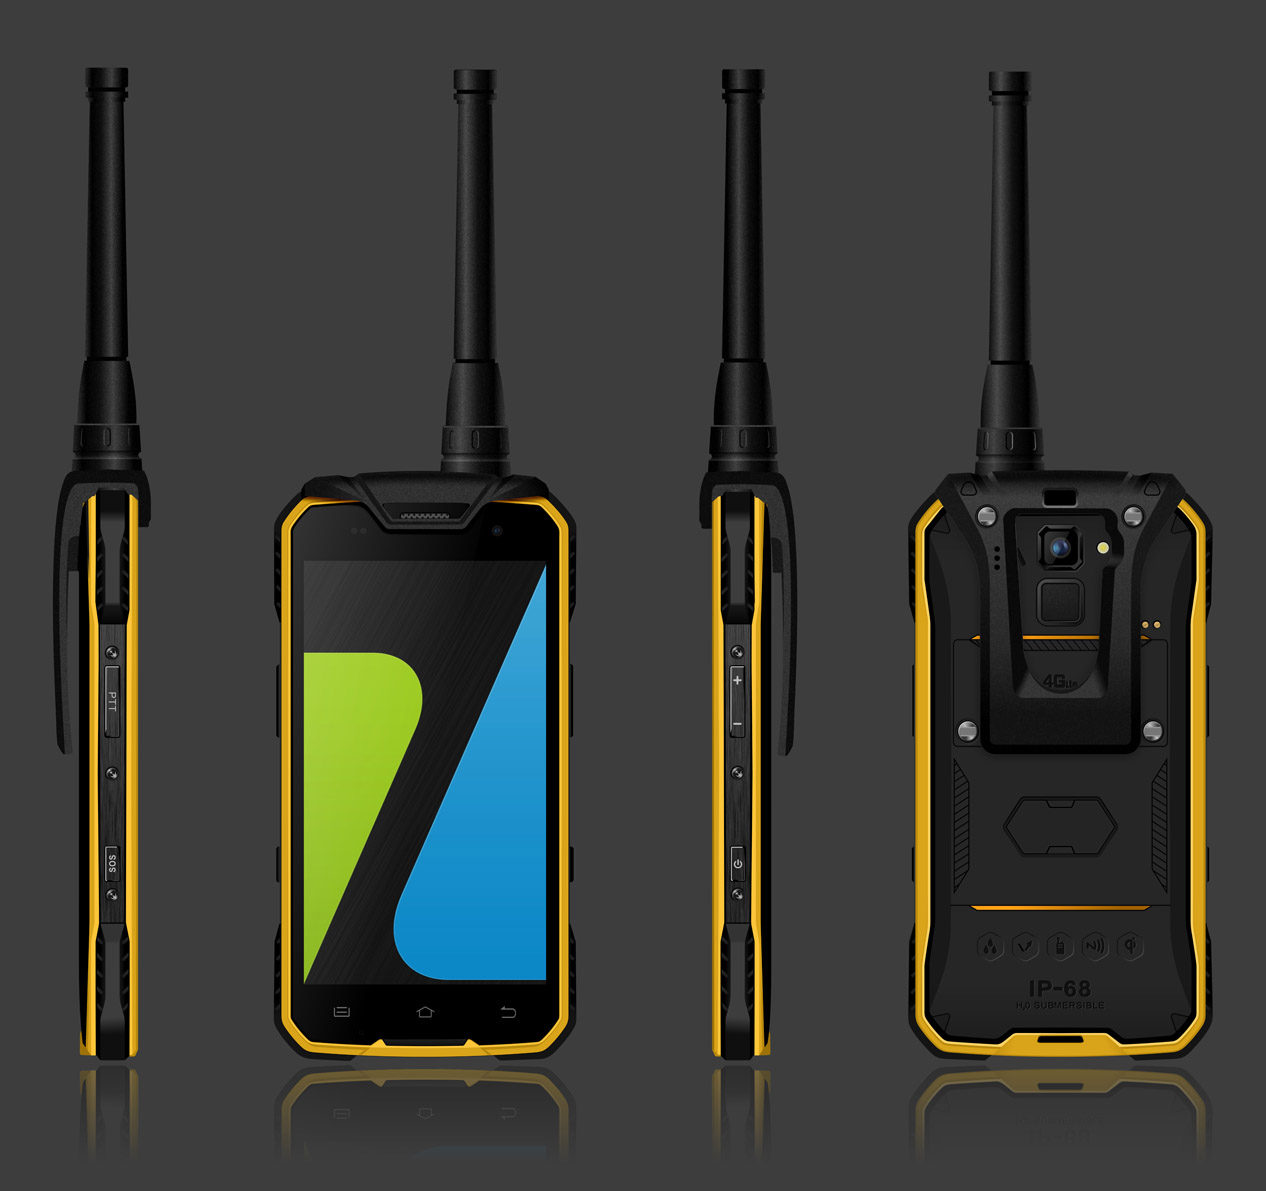 4.7 inch 4G NFC Octa Core Digital Walkie-Talkie Rugged phone or Rugged smartphone waterproof phone